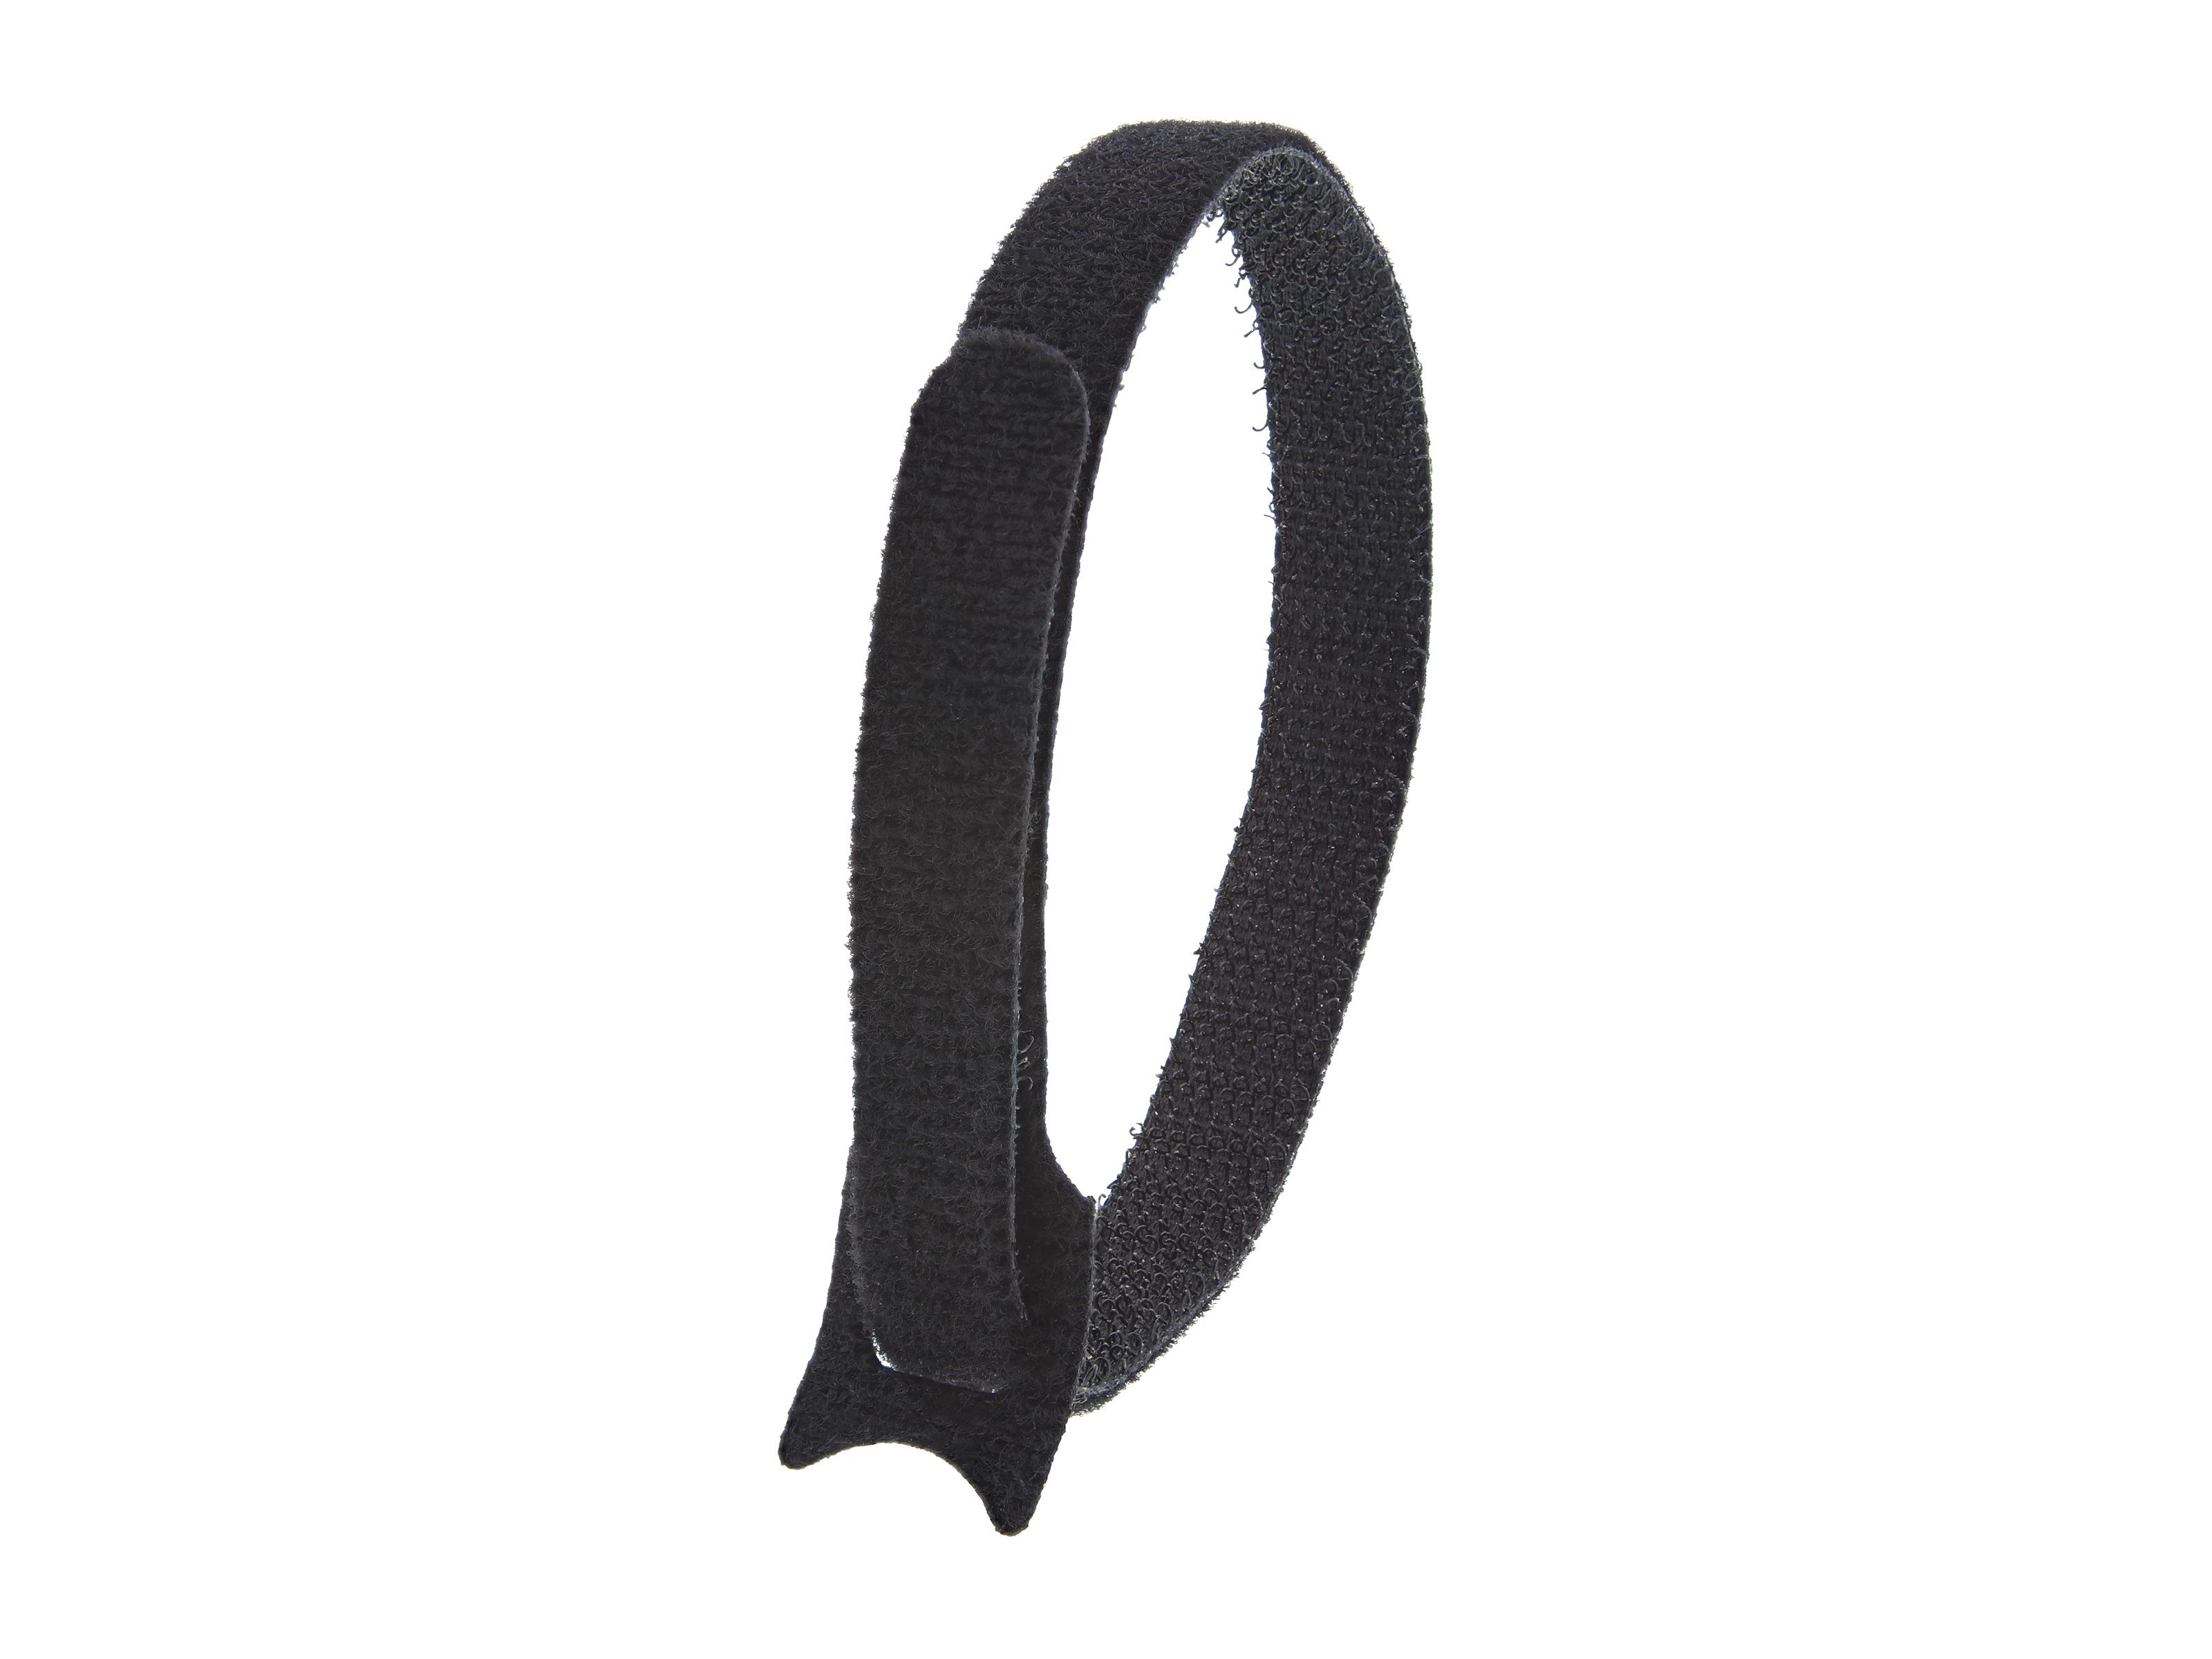 12 Inch Black Reuseable Tie Wrap - 50 Pack - Secure™ Cable Ties